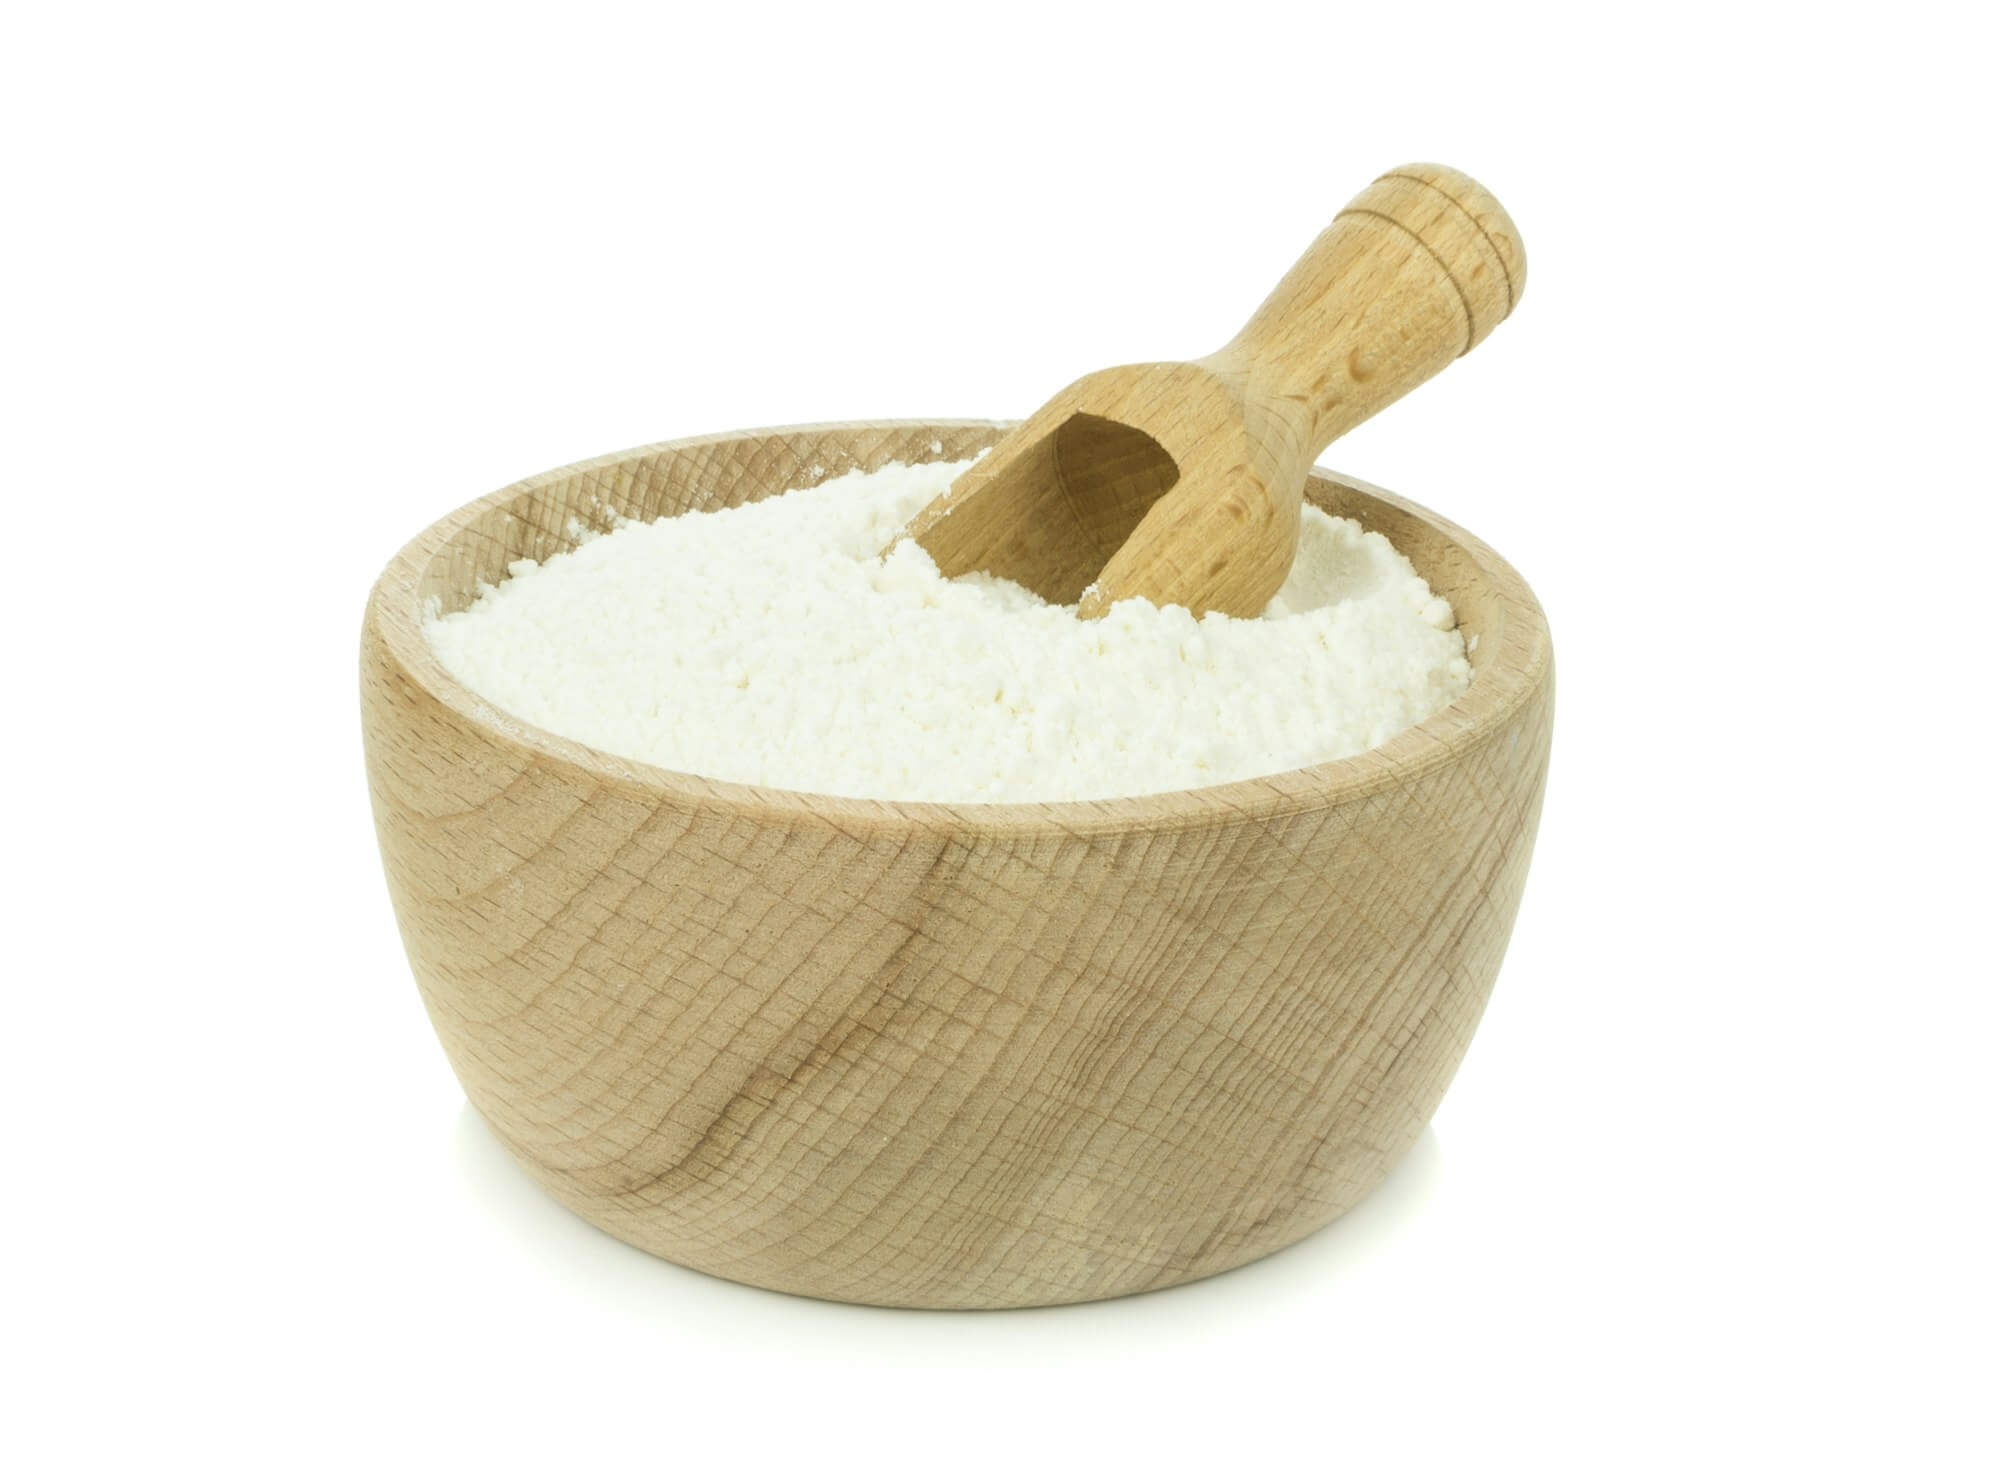 A Bowl of Flour